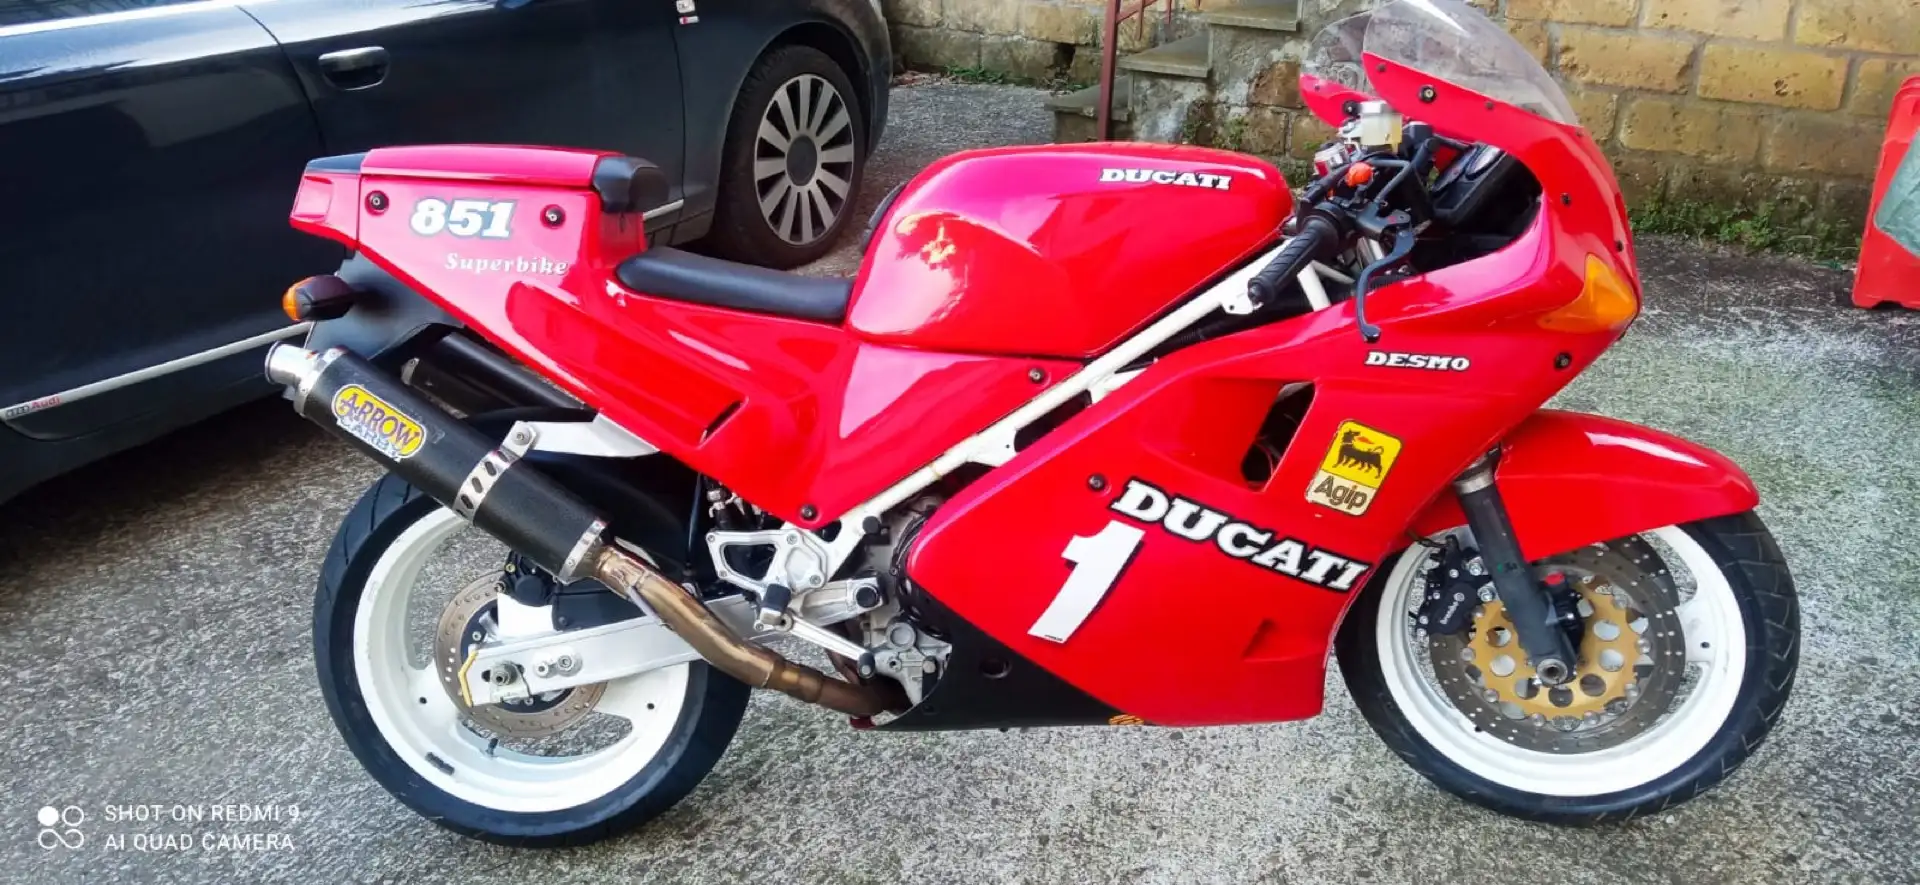 Ducati 851 superbike Rouge - 2